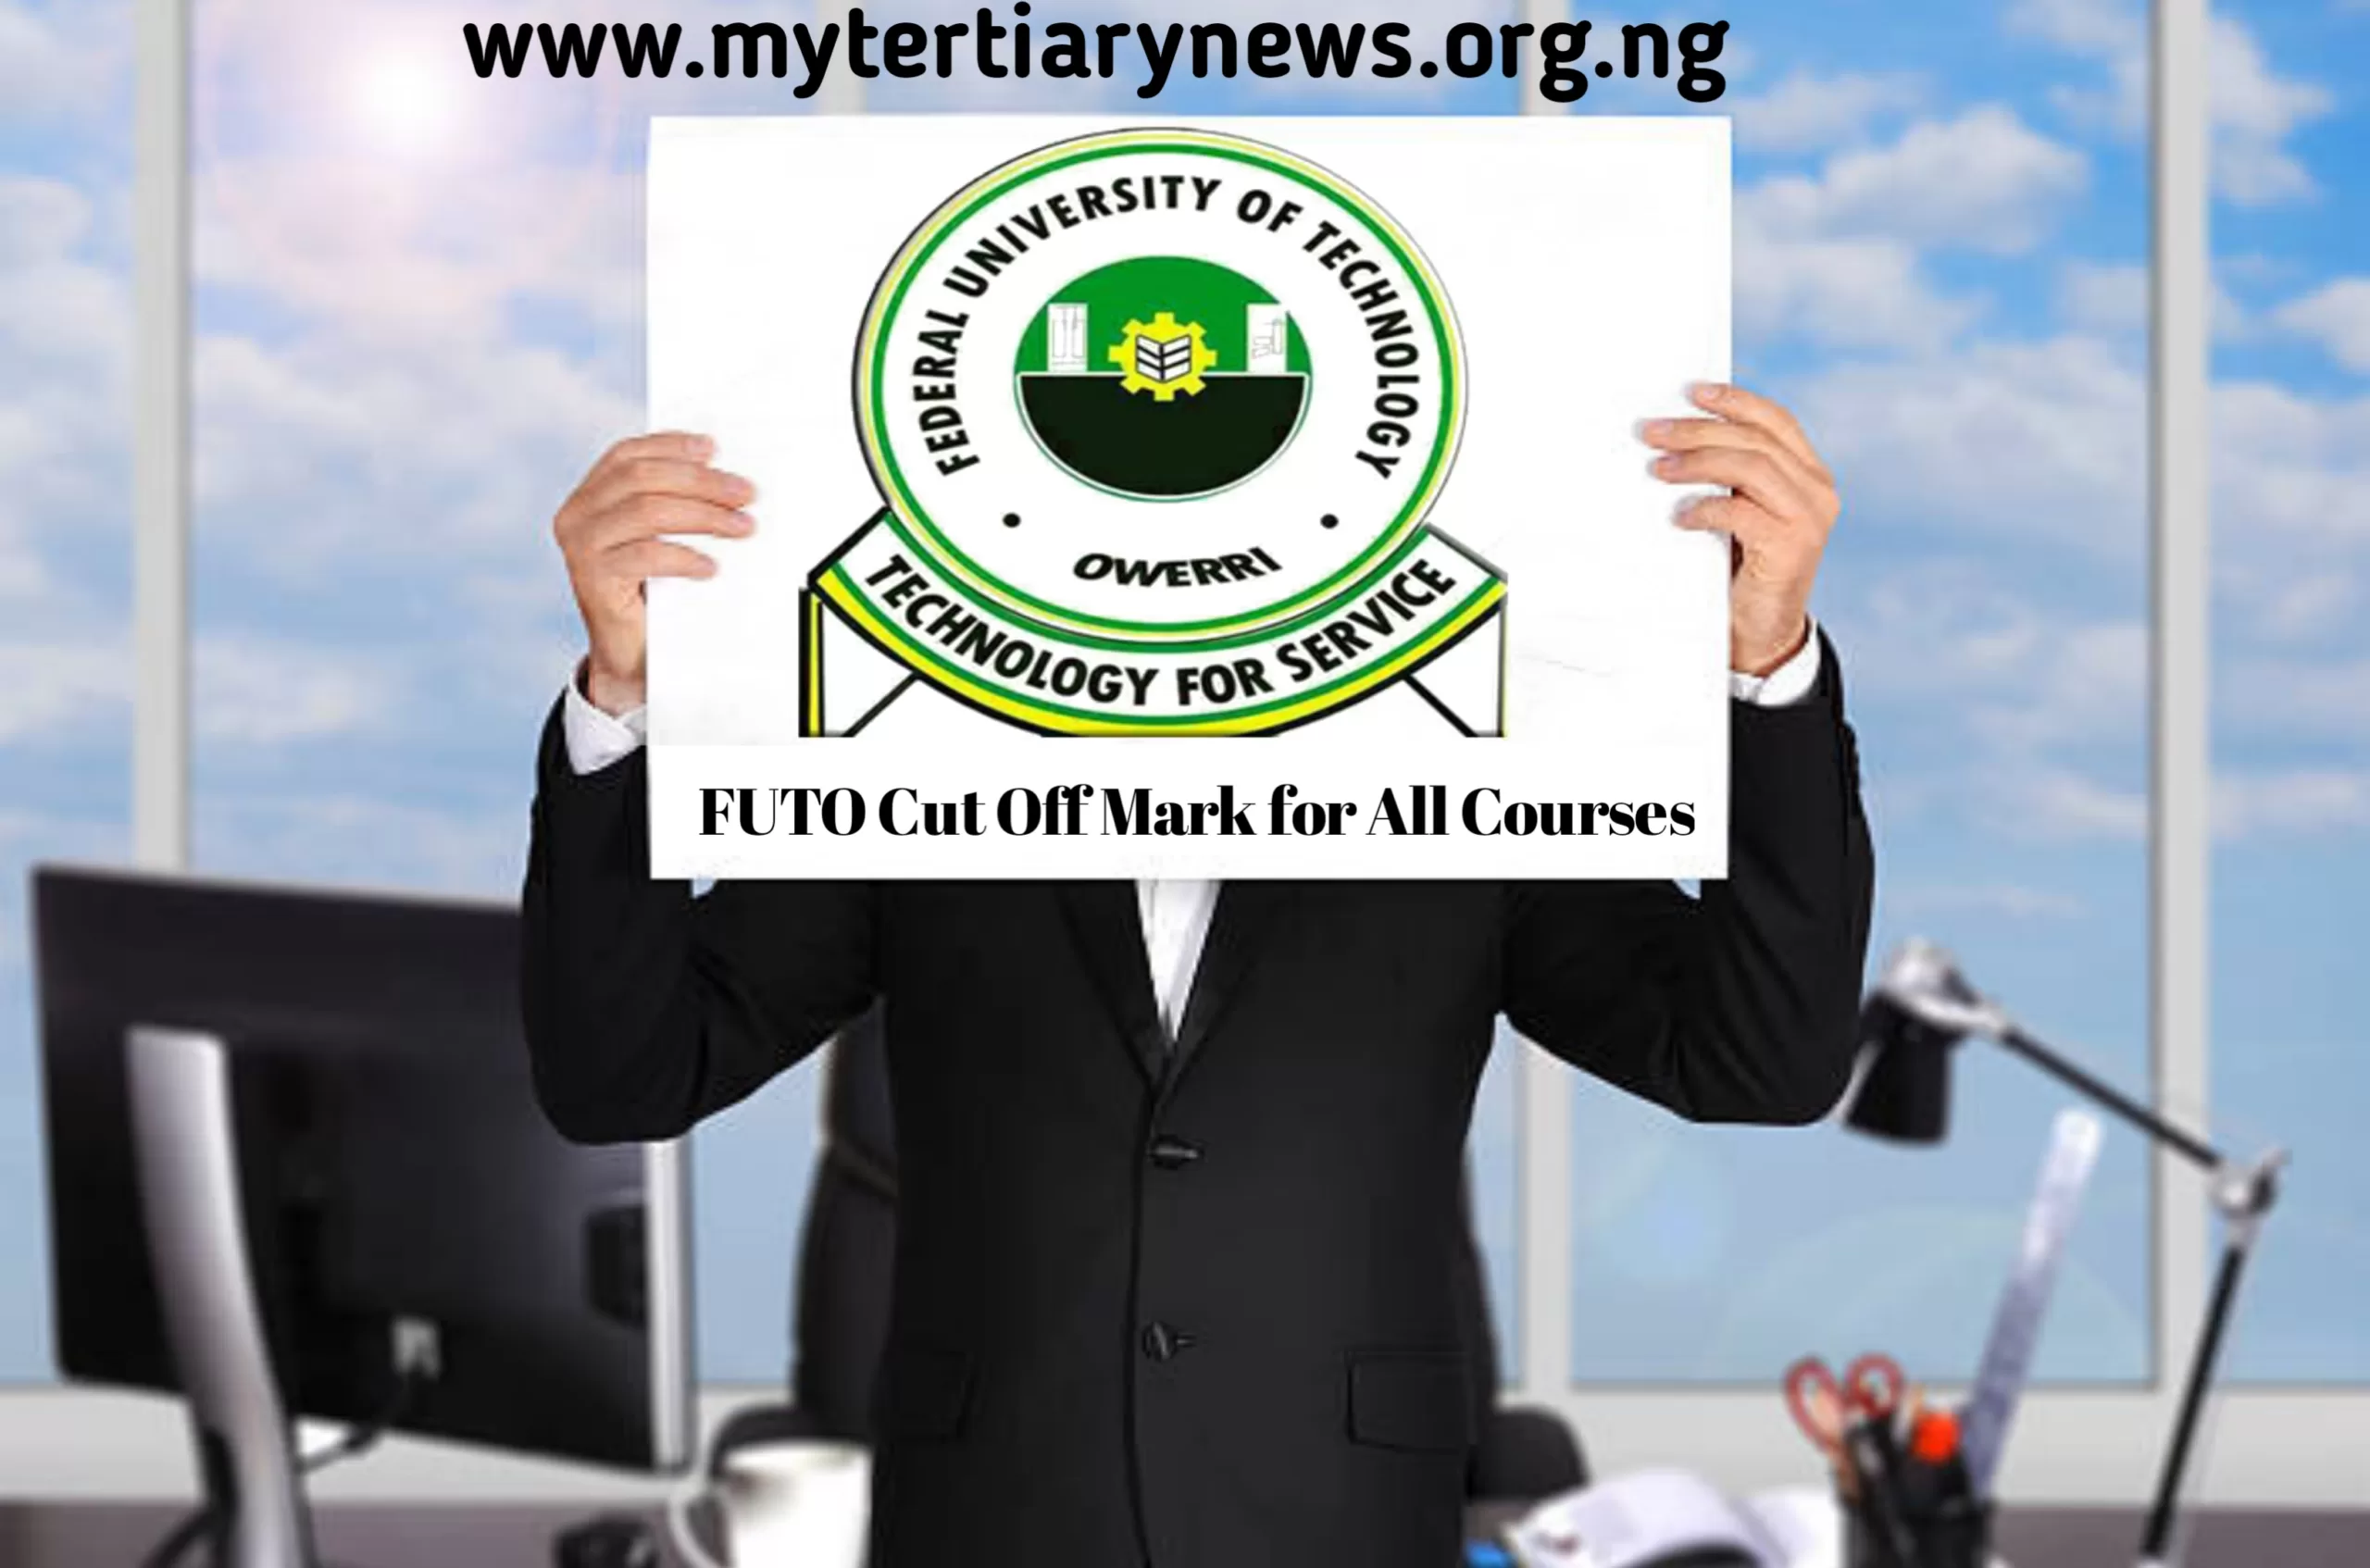 FUTO Image || FUTO Cut Off Mark for All Courses